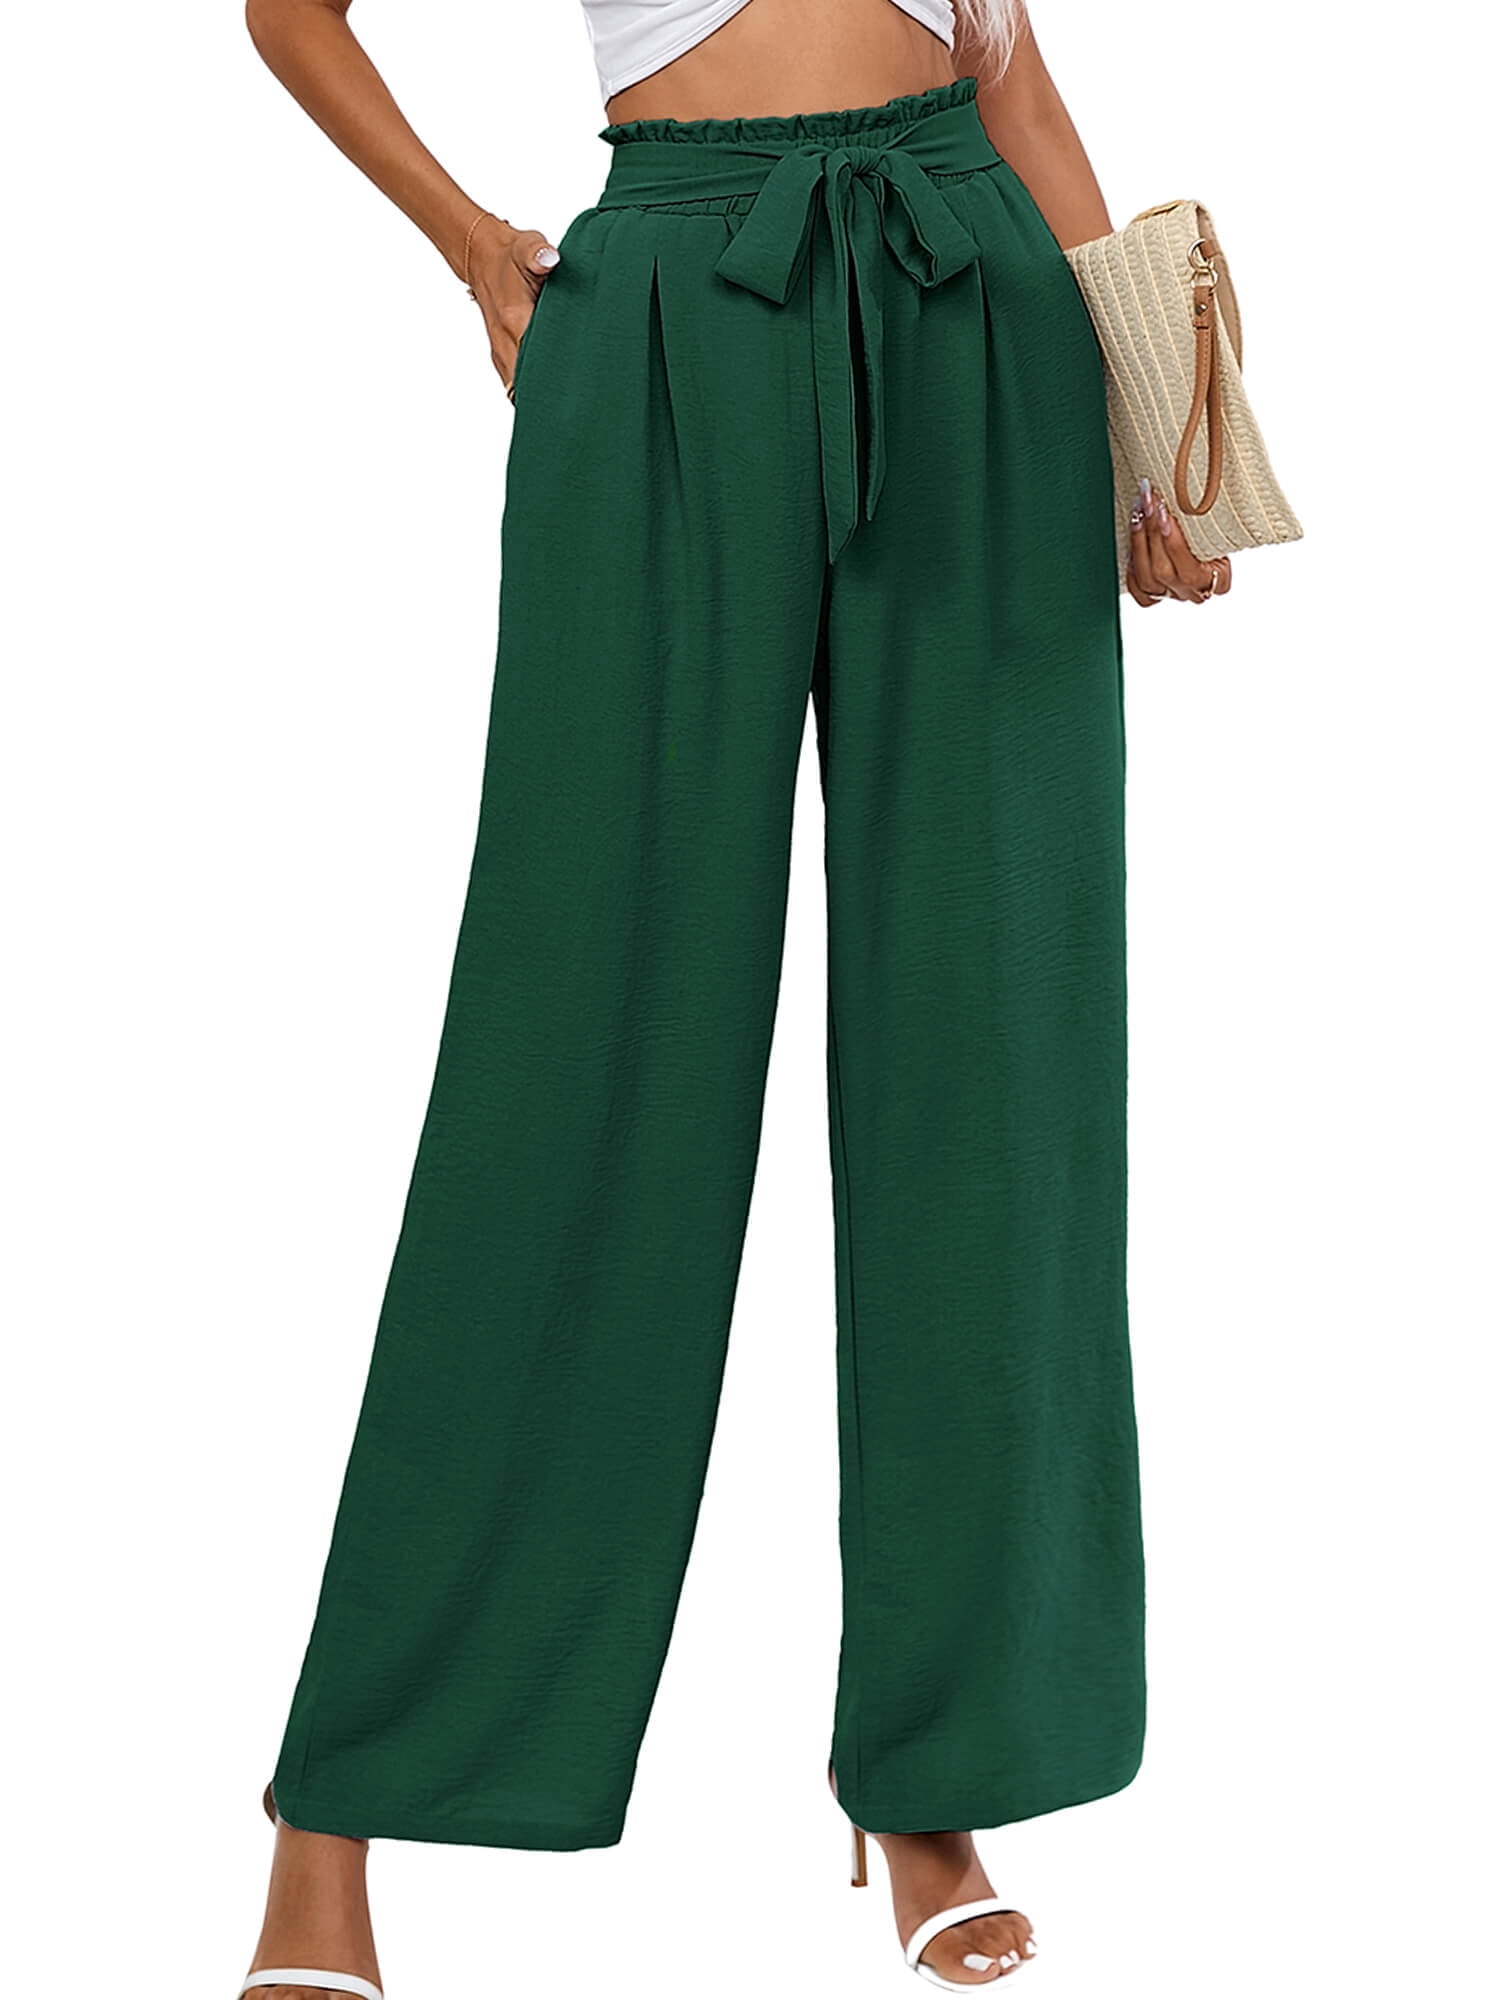 Green Wool Pants, Suspender Pants, Long Wool Pants, Womens Pants With  Pockets, Wide Leg Pants, Vintage Wool Pants, Autumn Winter Pants 2068 -  Etsy | Suspender pants, Plaid wool jacket, Green dress pants